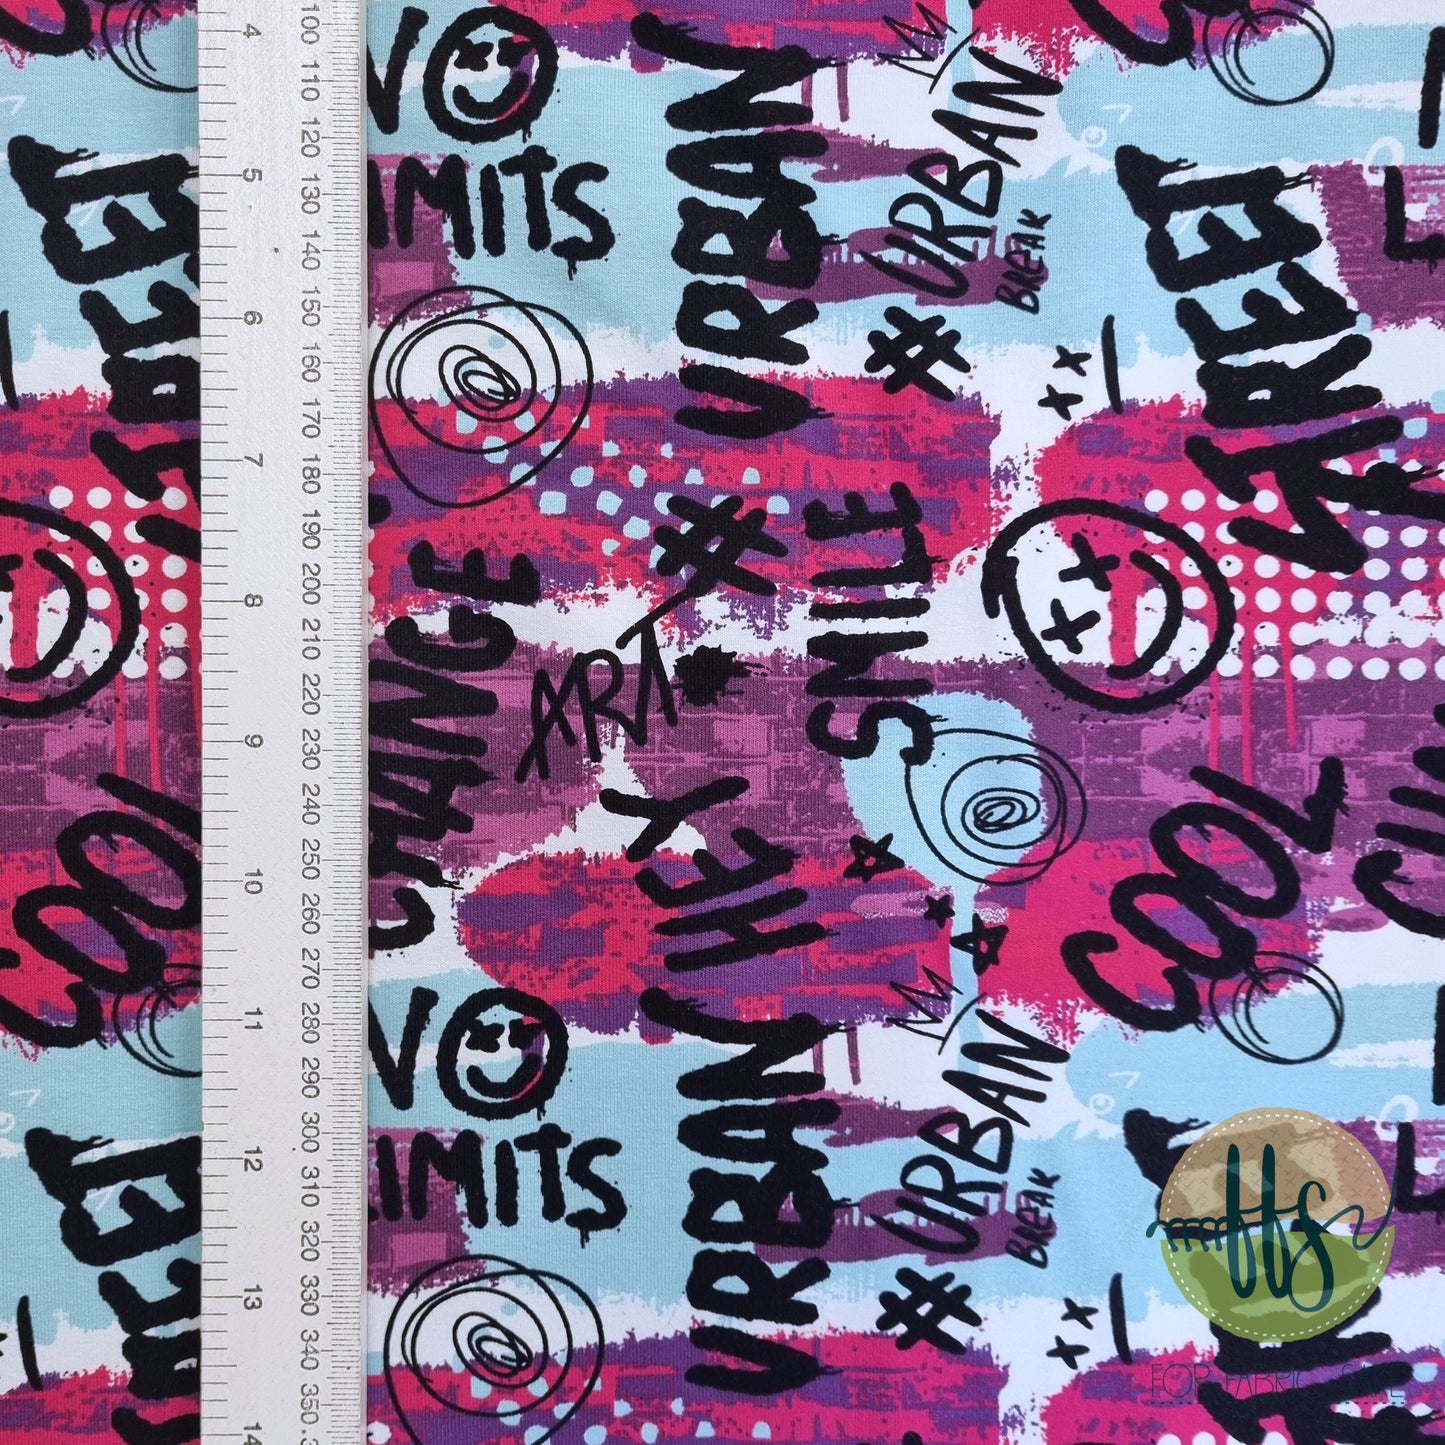 No Limits Graffiti Art- Cotton Spandex 215g